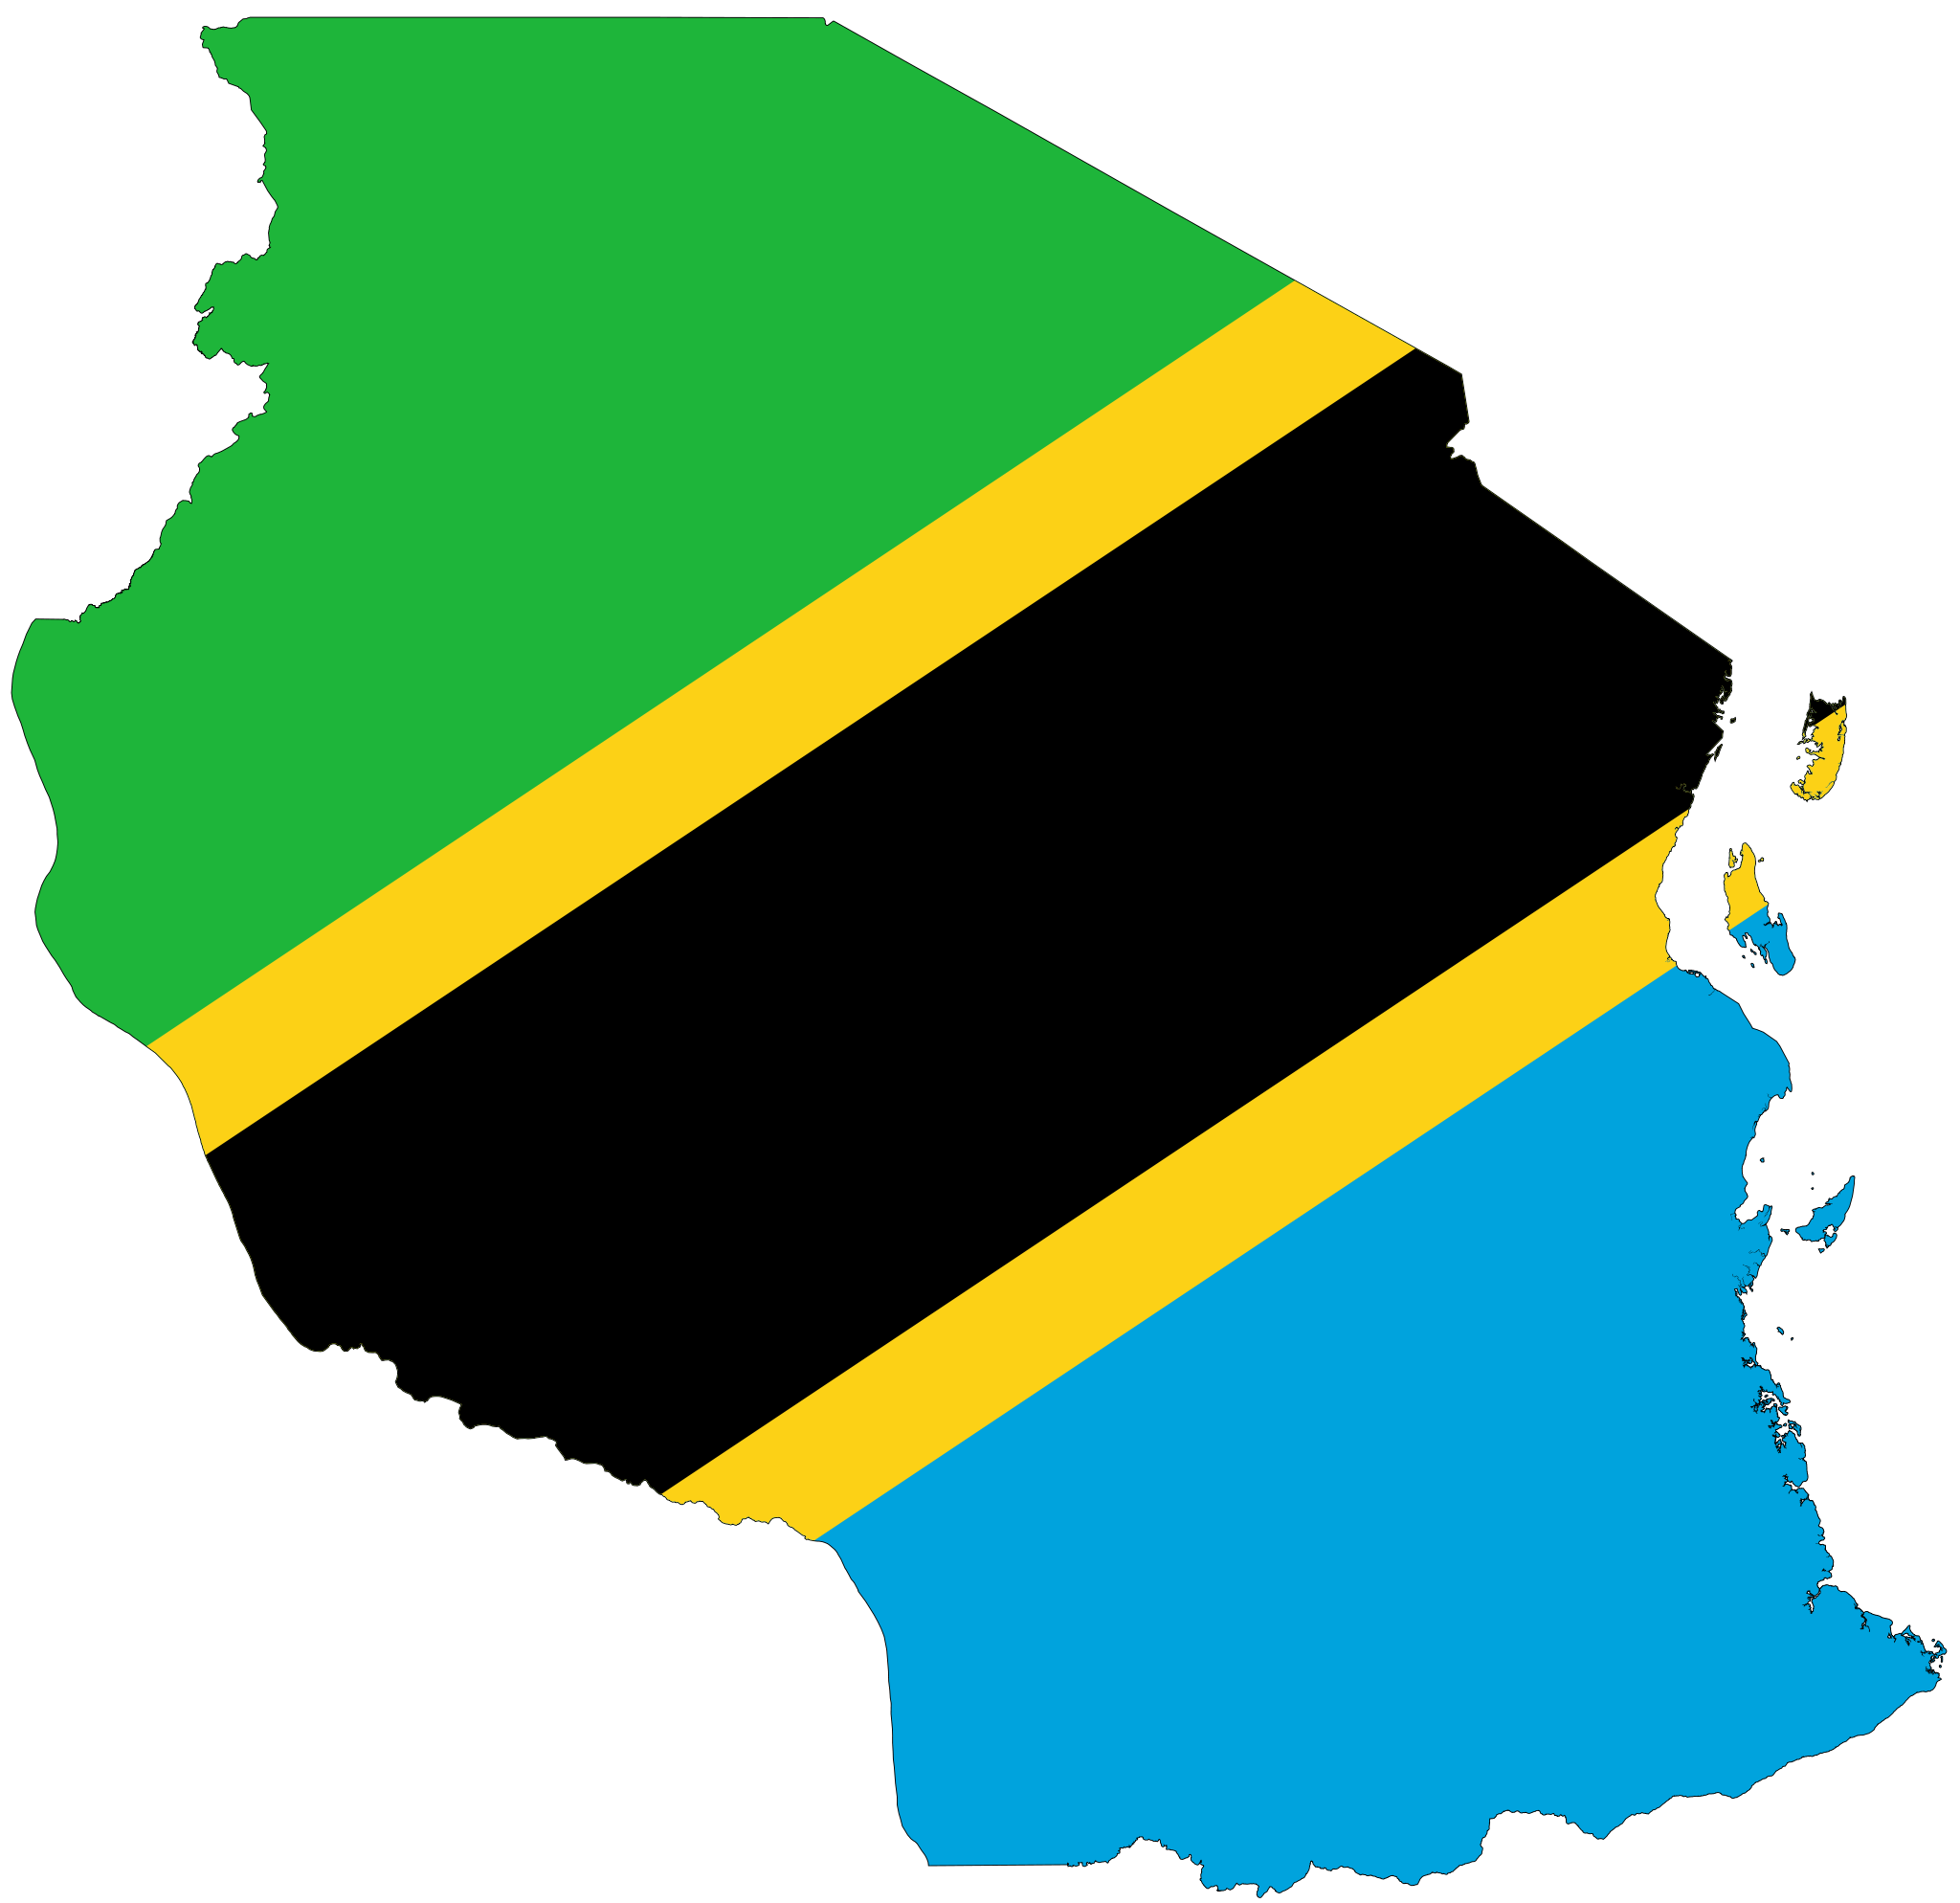 November afrodad tanzaniaflagmap. Evaluation clipart score